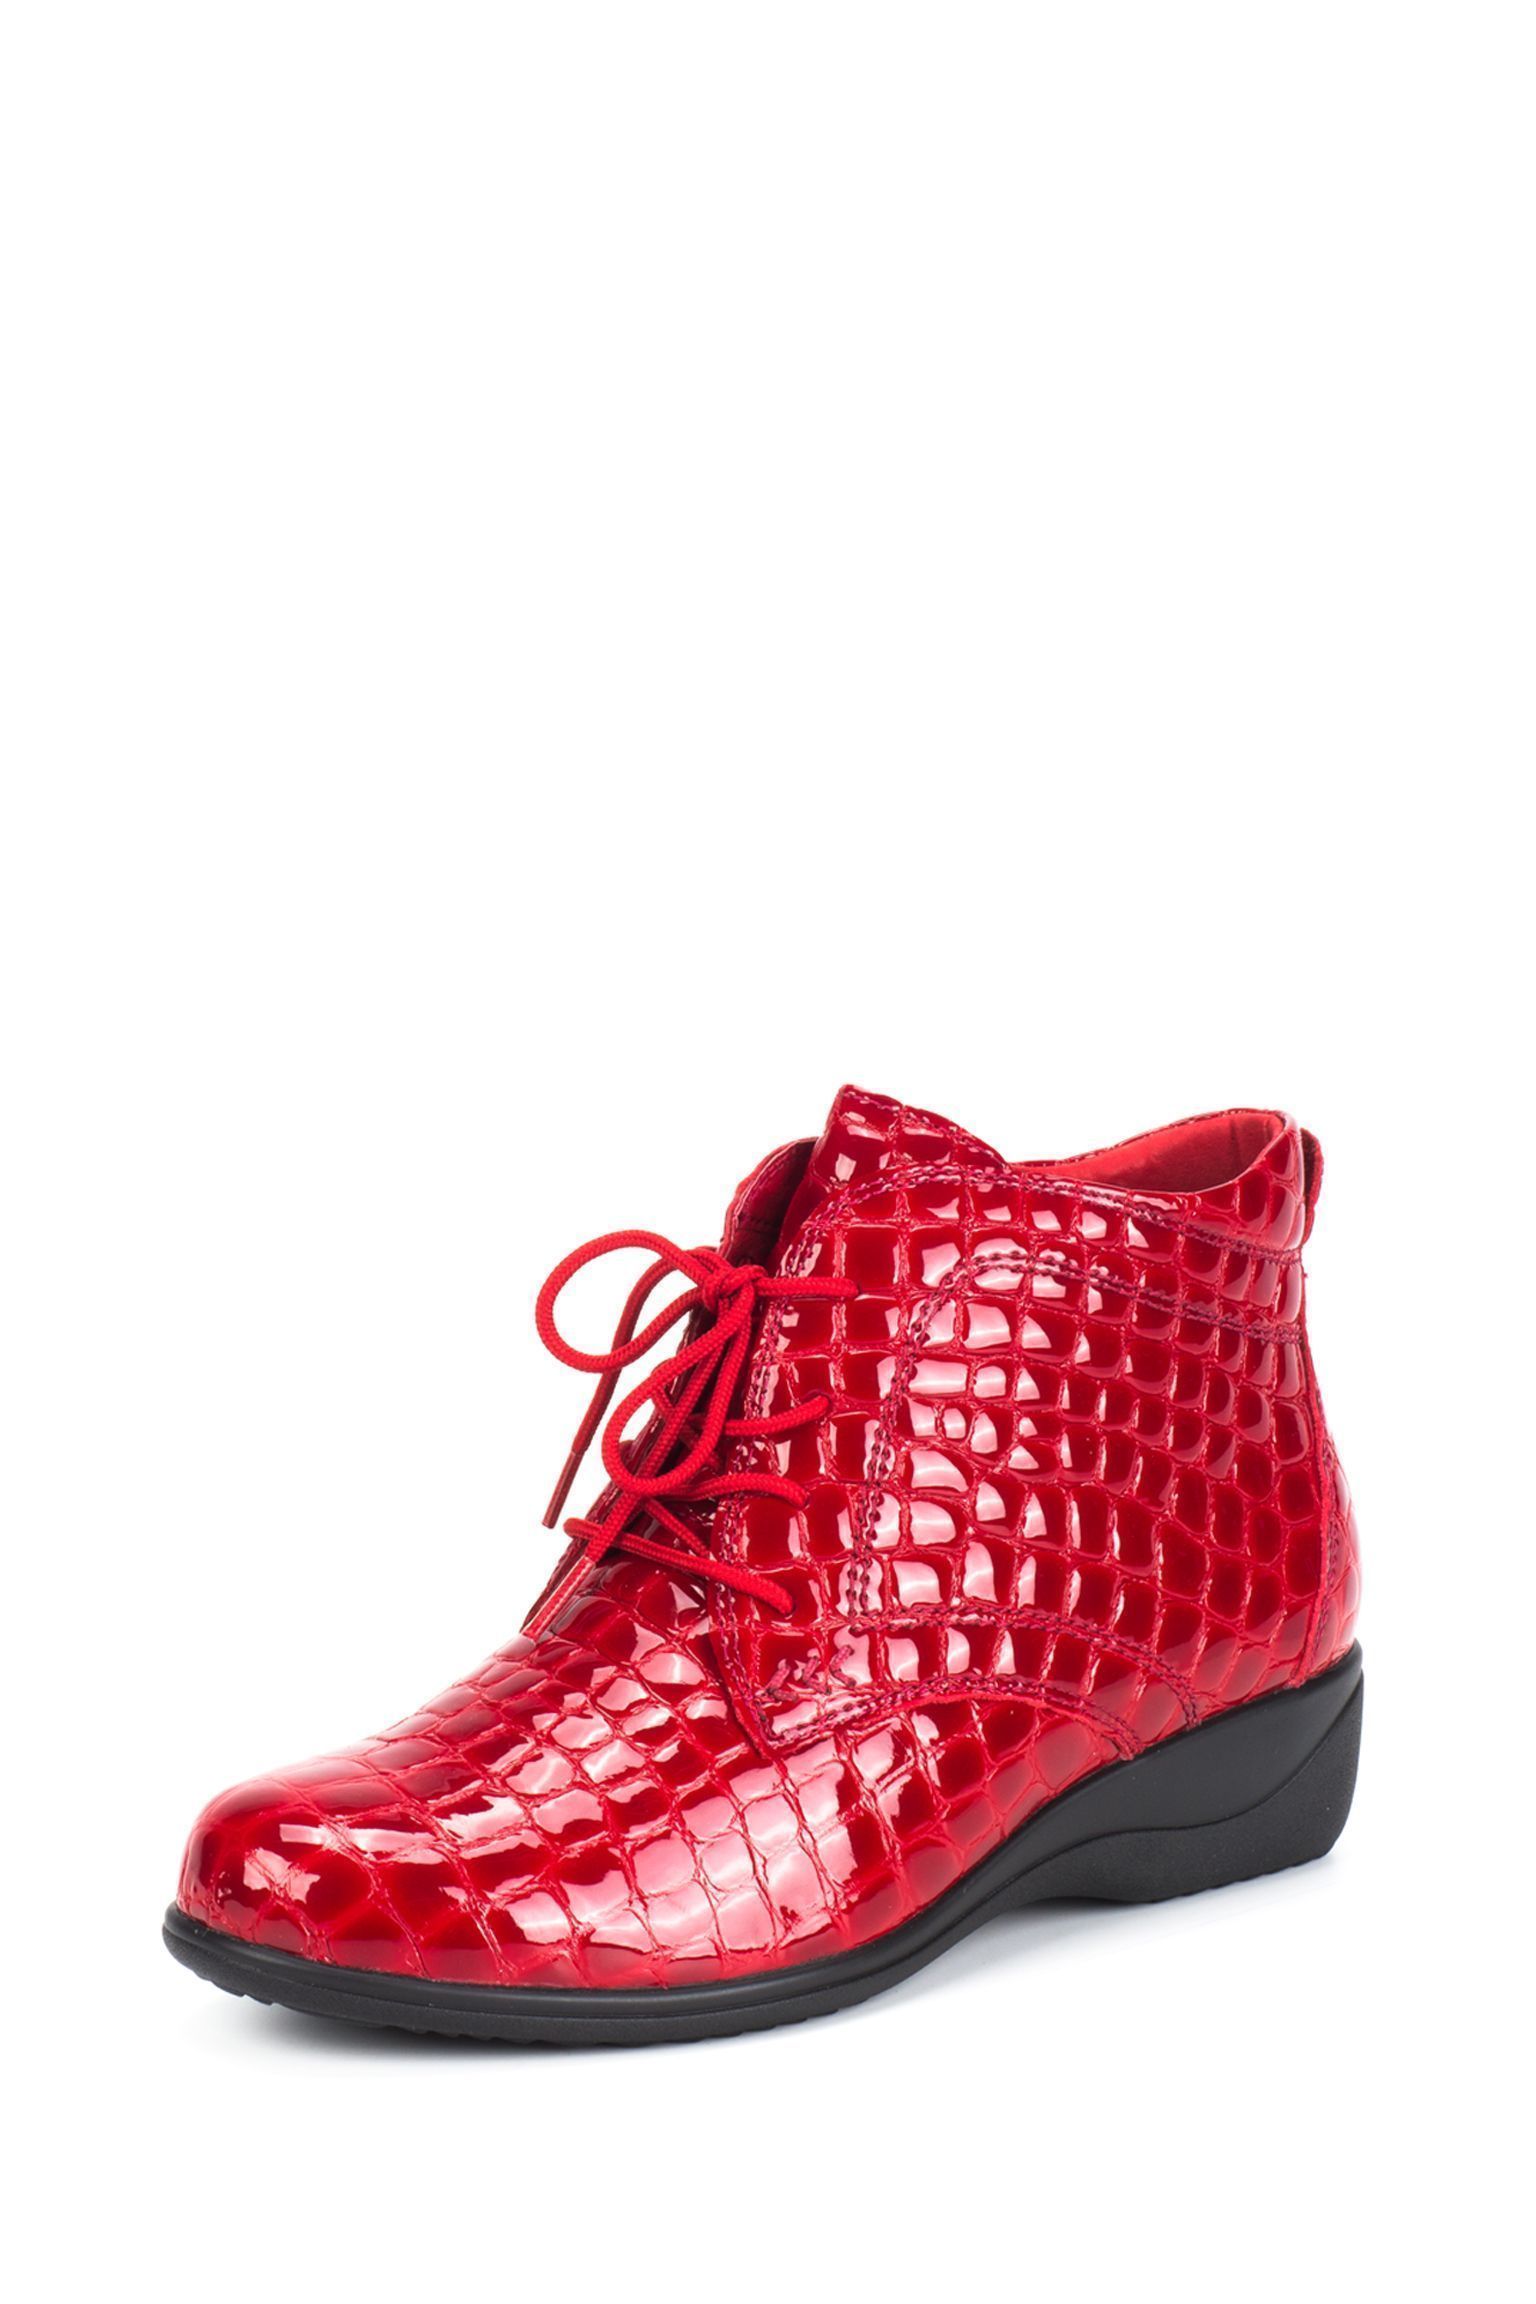 Купить ботинки на wildberries. Красные ботинки. Красные ботинки женские. Красные ботиночки женские. Красные полуботинки.